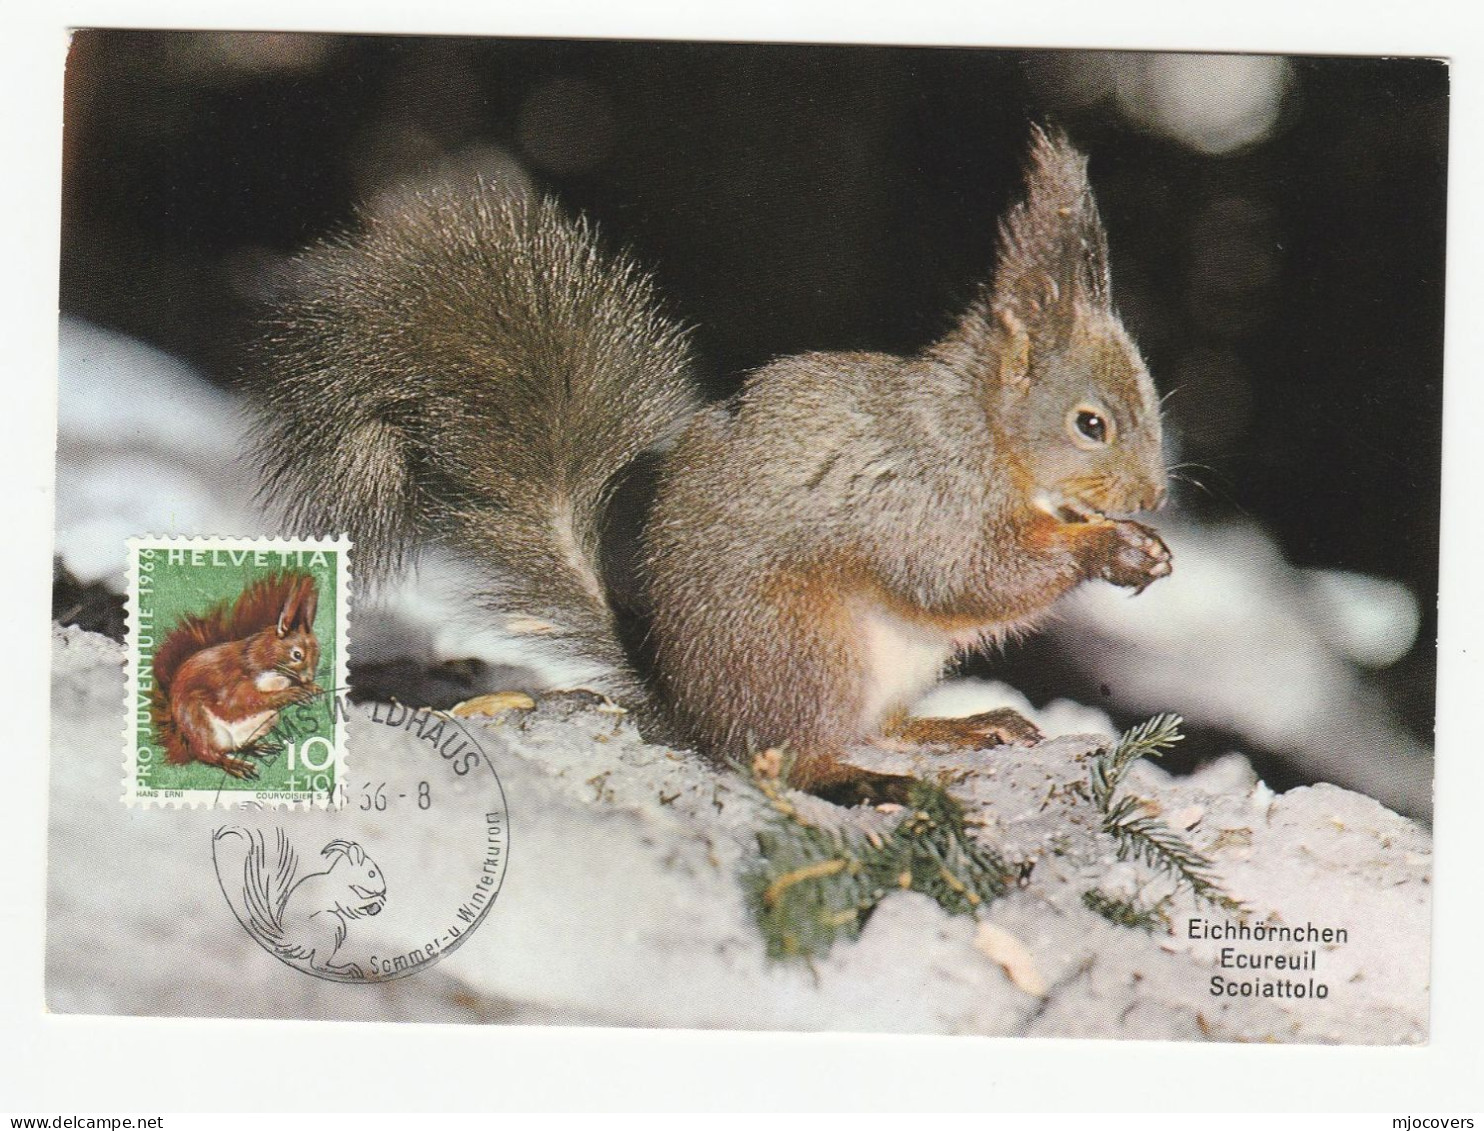 1966 SQUIRREL Maximum CARD Switzerland Stamps Fdc Cover Postcard - Maximumkaarten